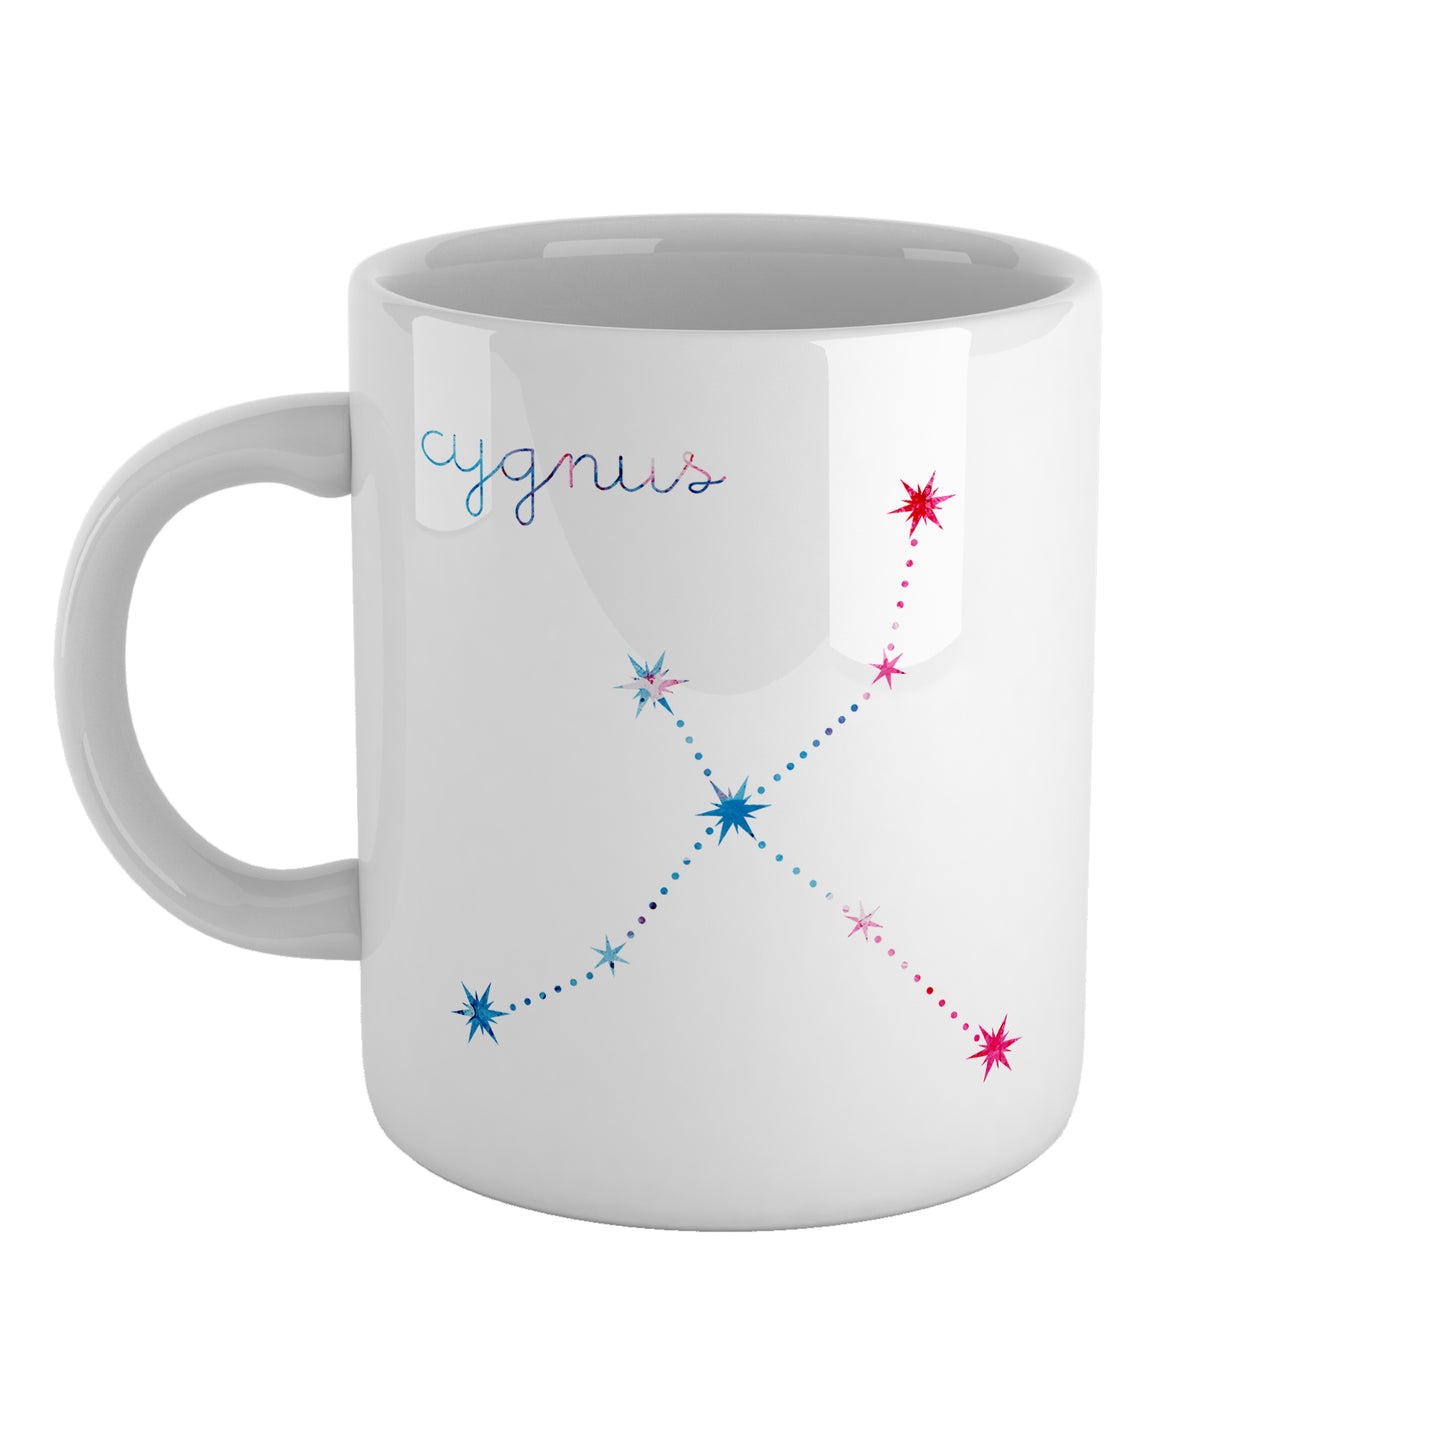 Cygnus constellation | Ceramic mug